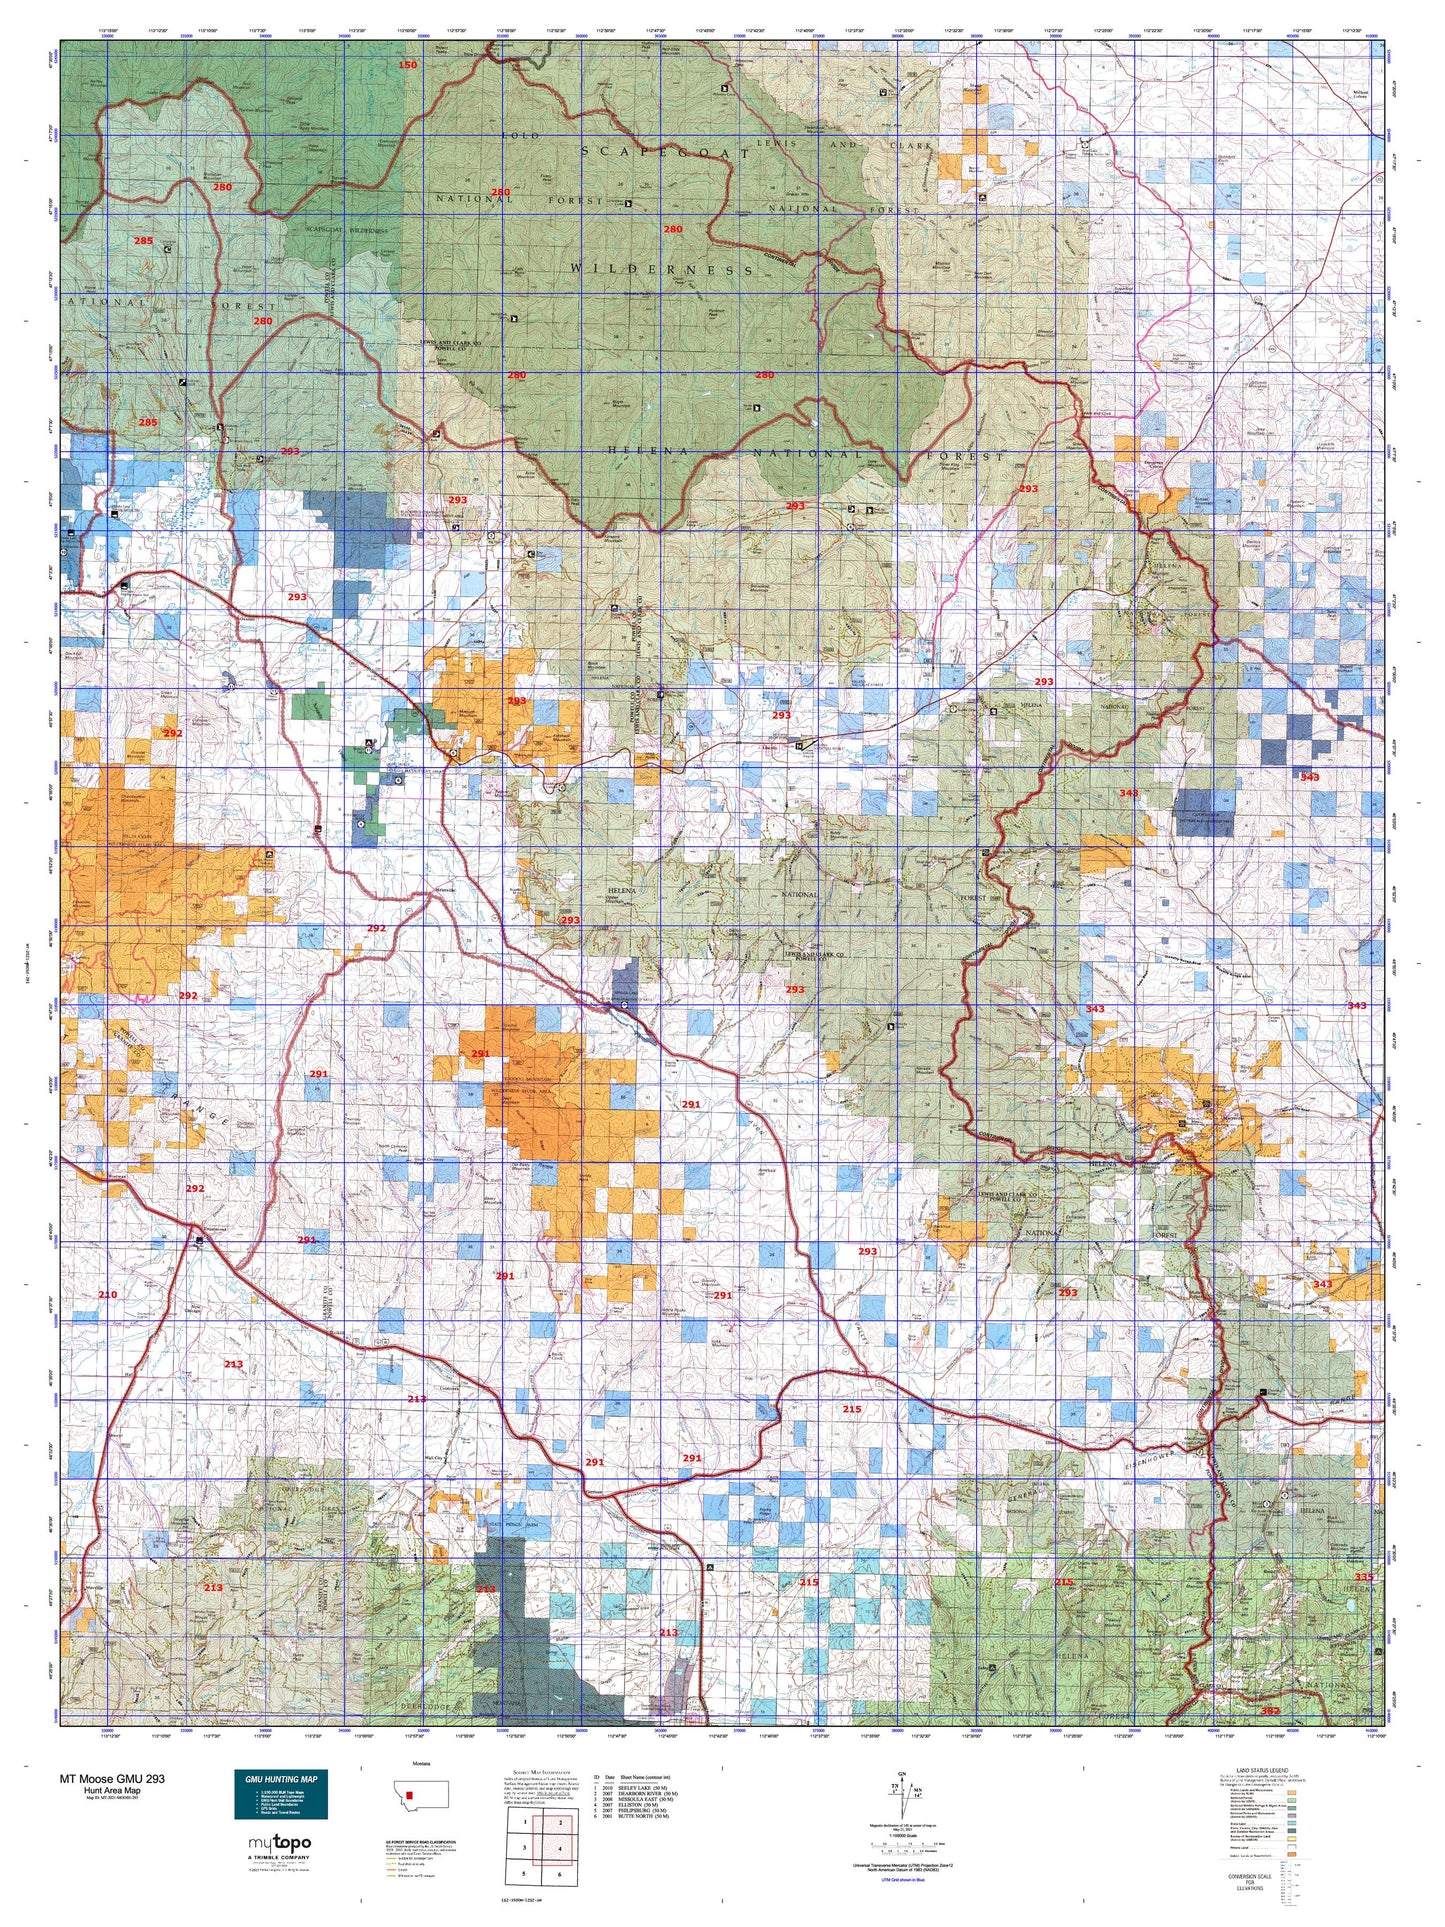 Montana Moose GMU 293 Map Image